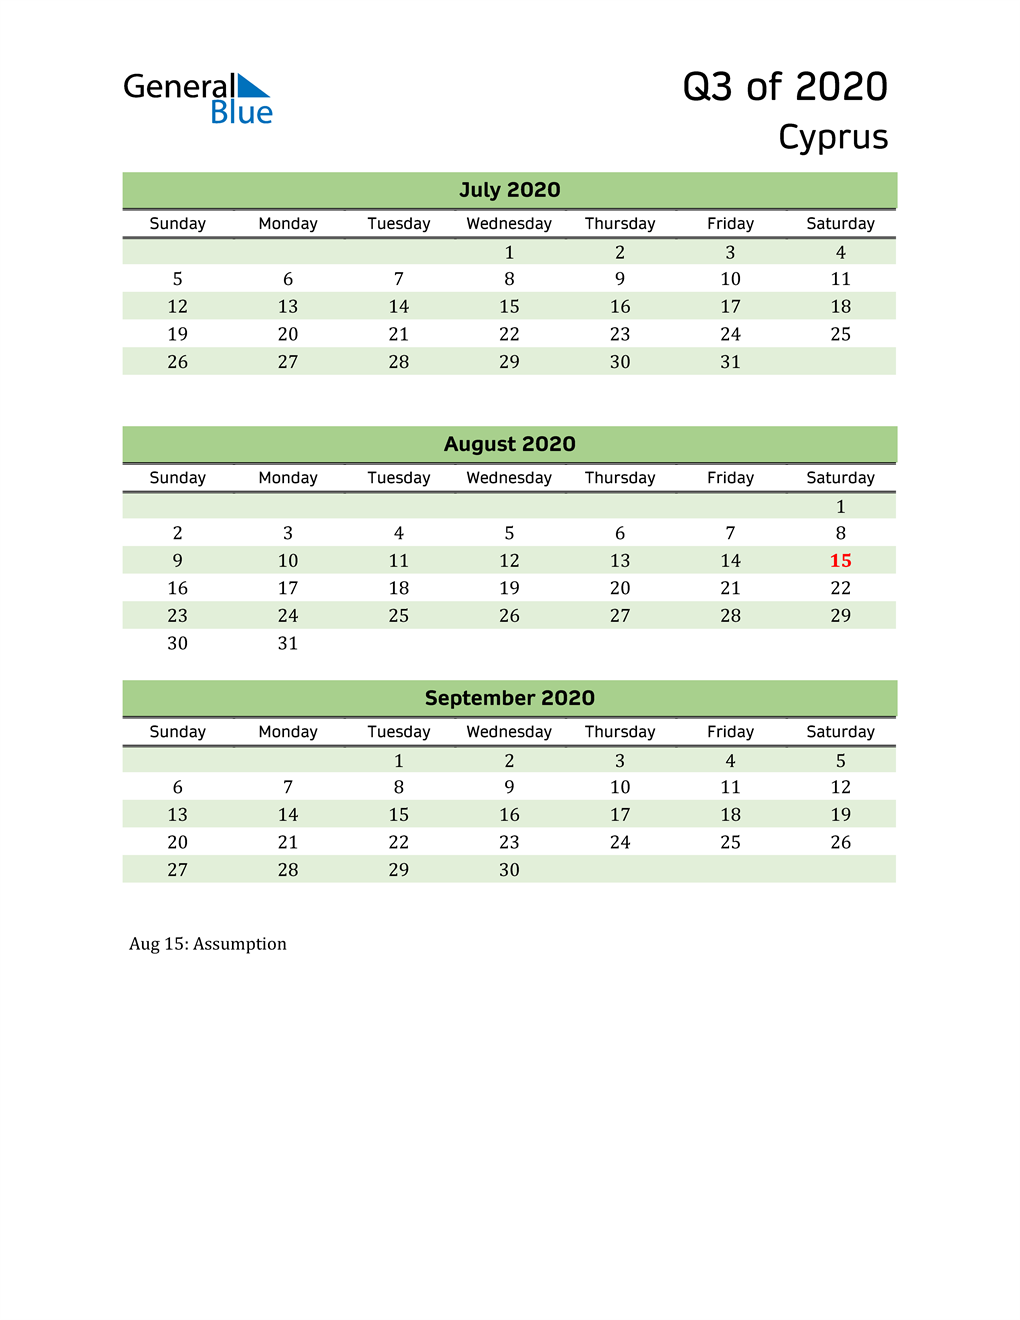  Quarterly Calendar 2020 with Cyprus Holidays 